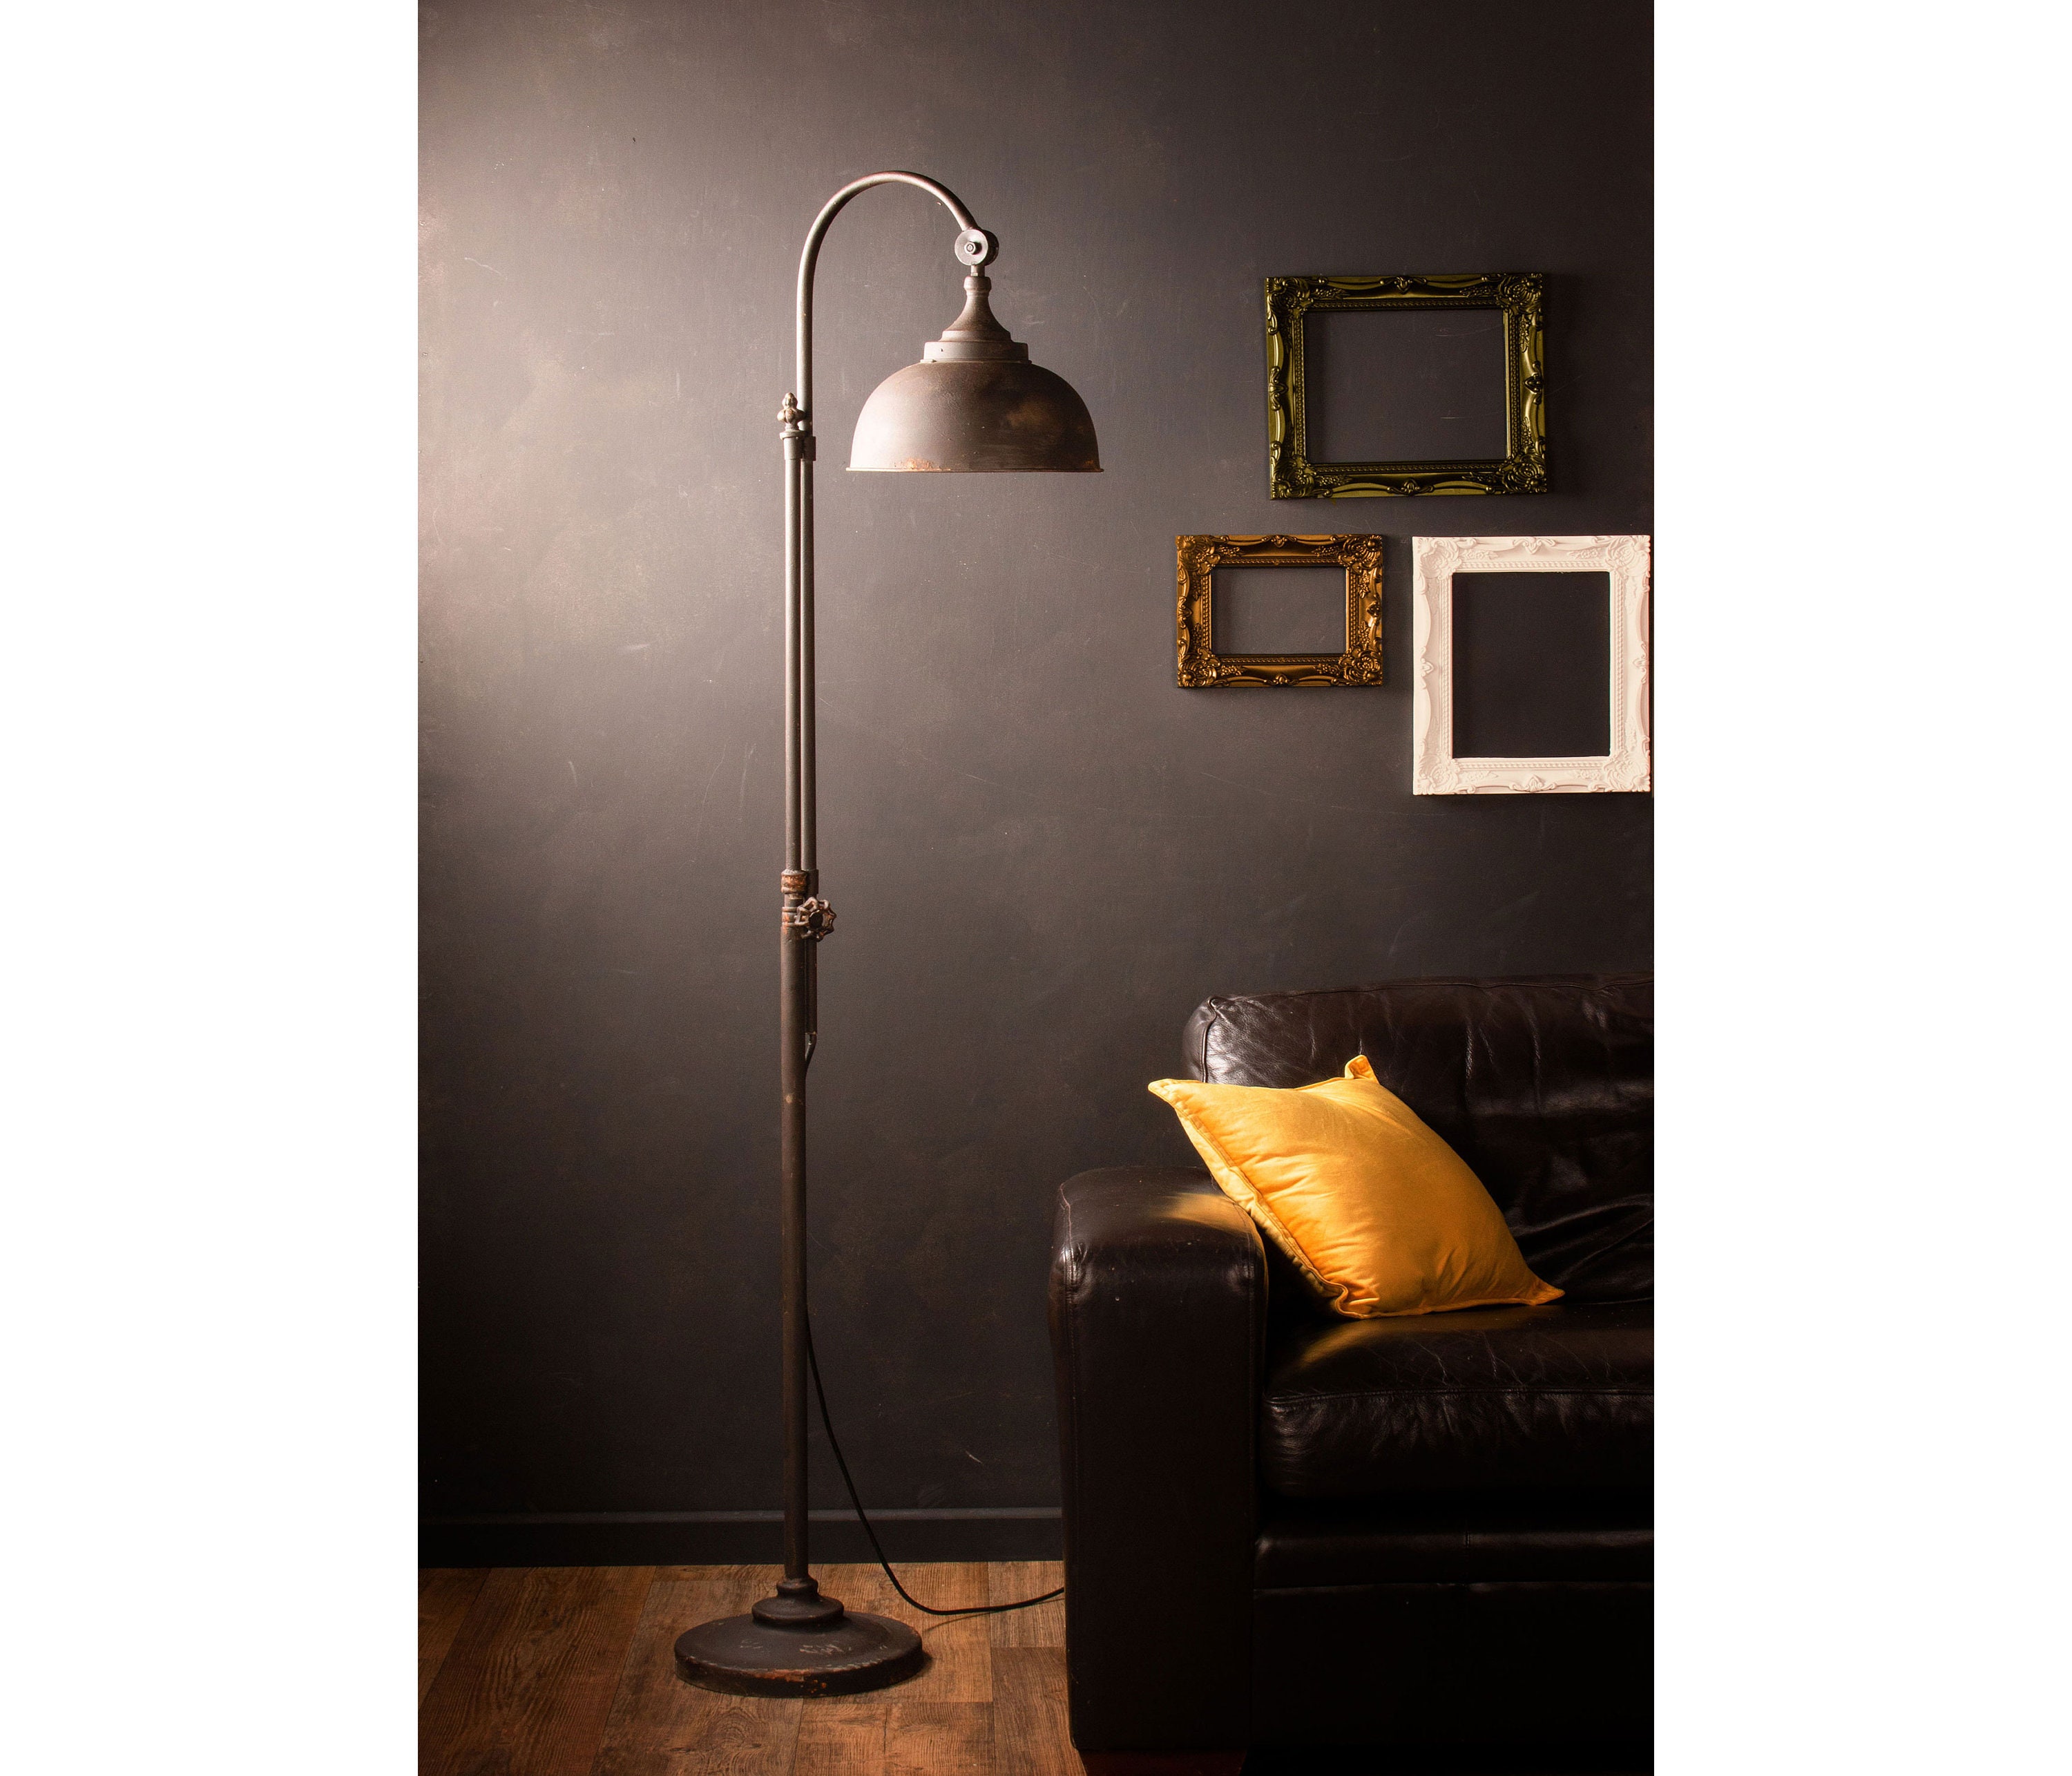 Vintage Industrial Style Led Floor Lamp, Floor Lamp Retro Style